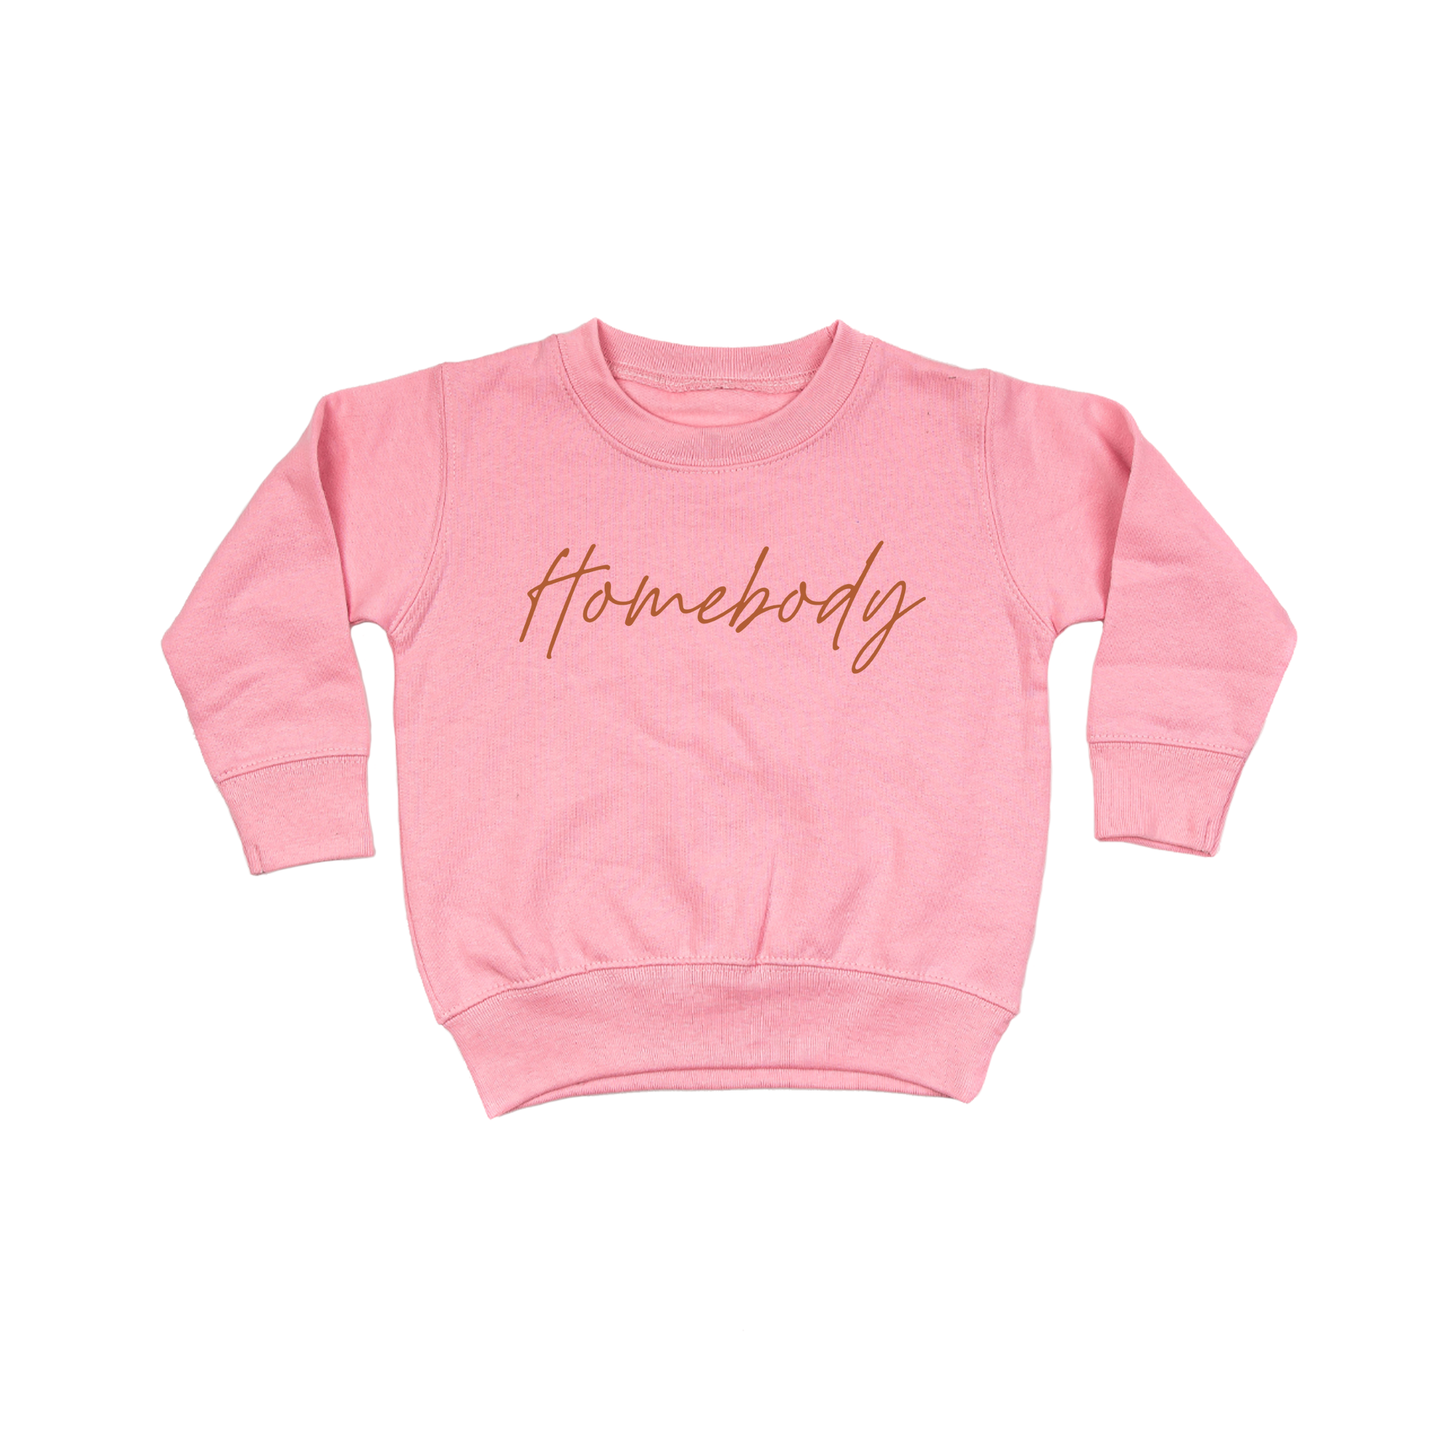 Homebody (Rust) - Kids Sweatshirt (Pink)